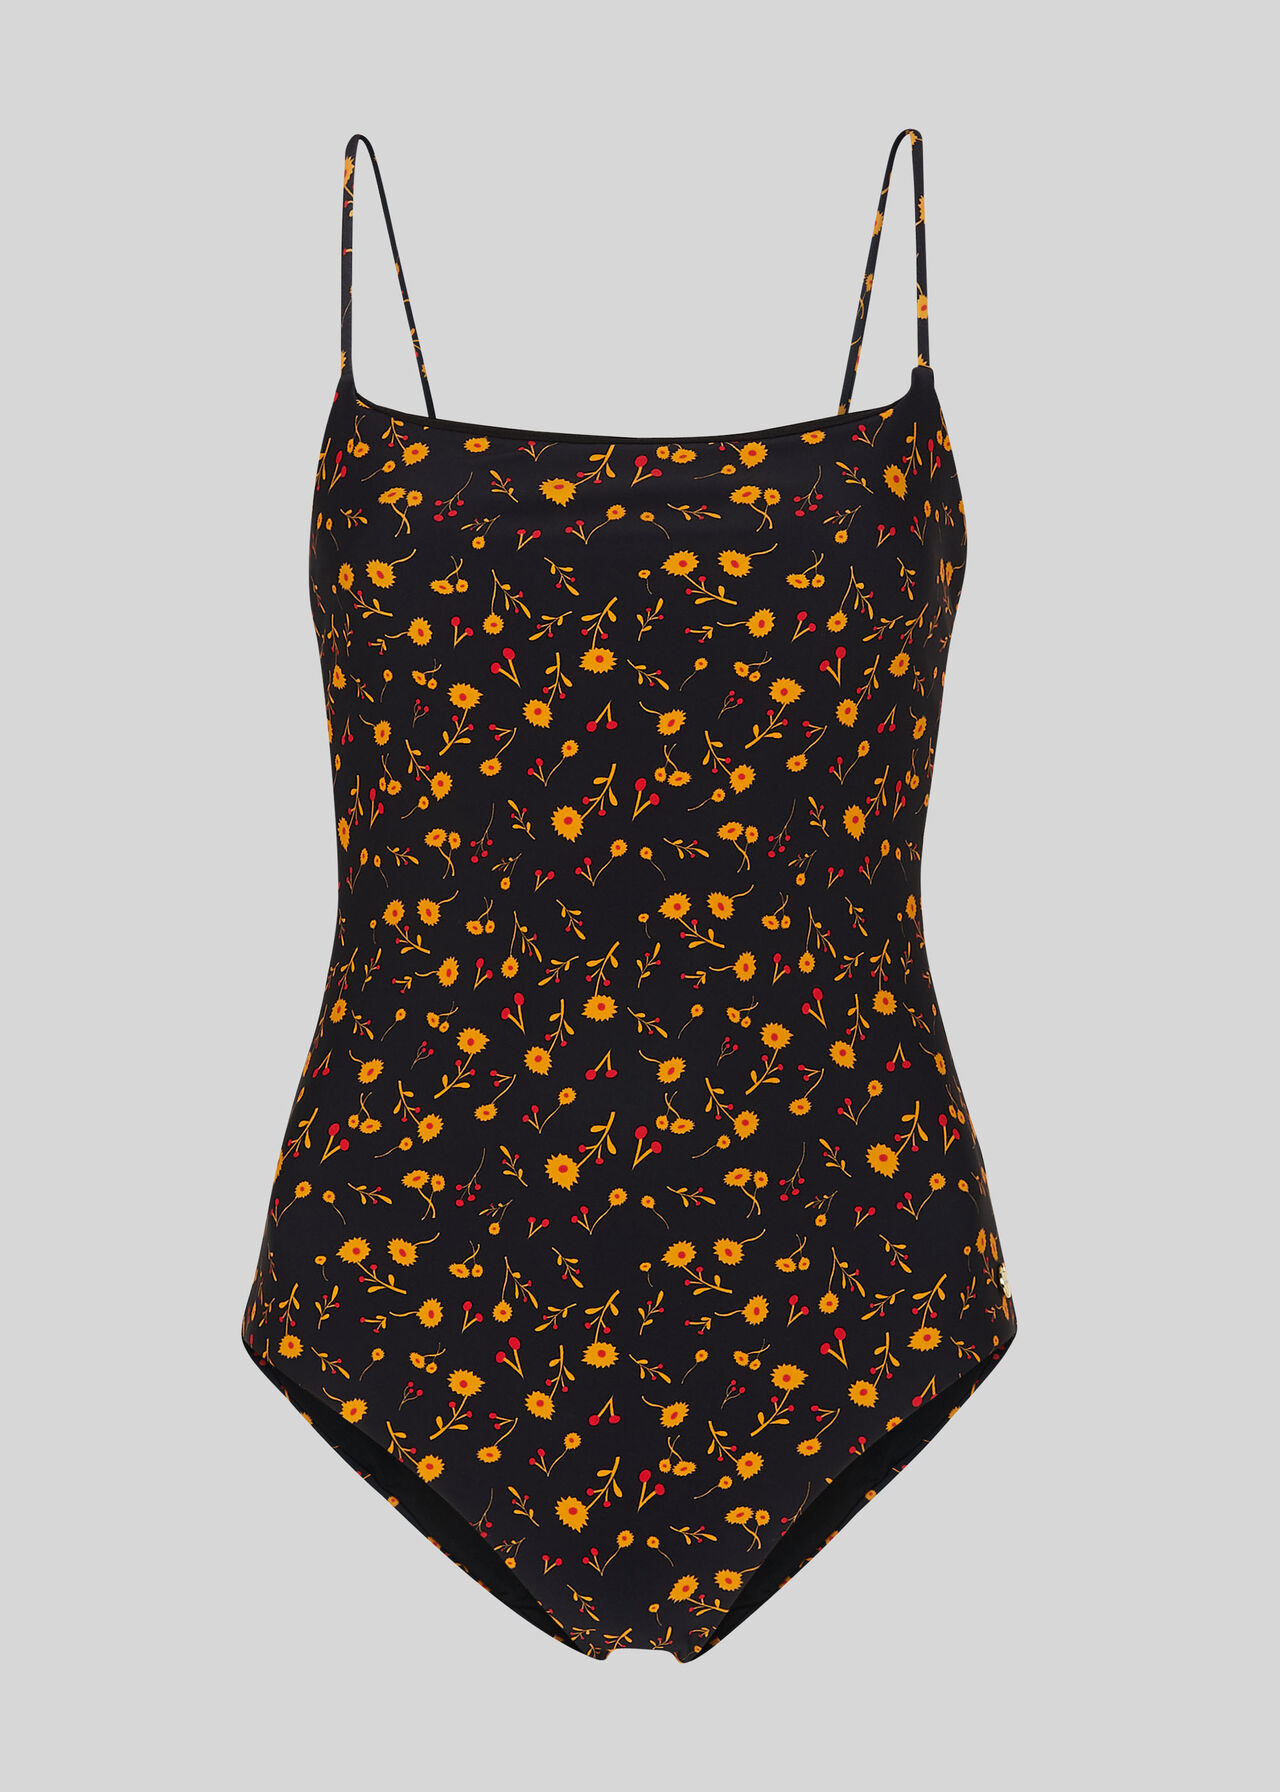 Aster Floral Print Swimsuit Black/Multi